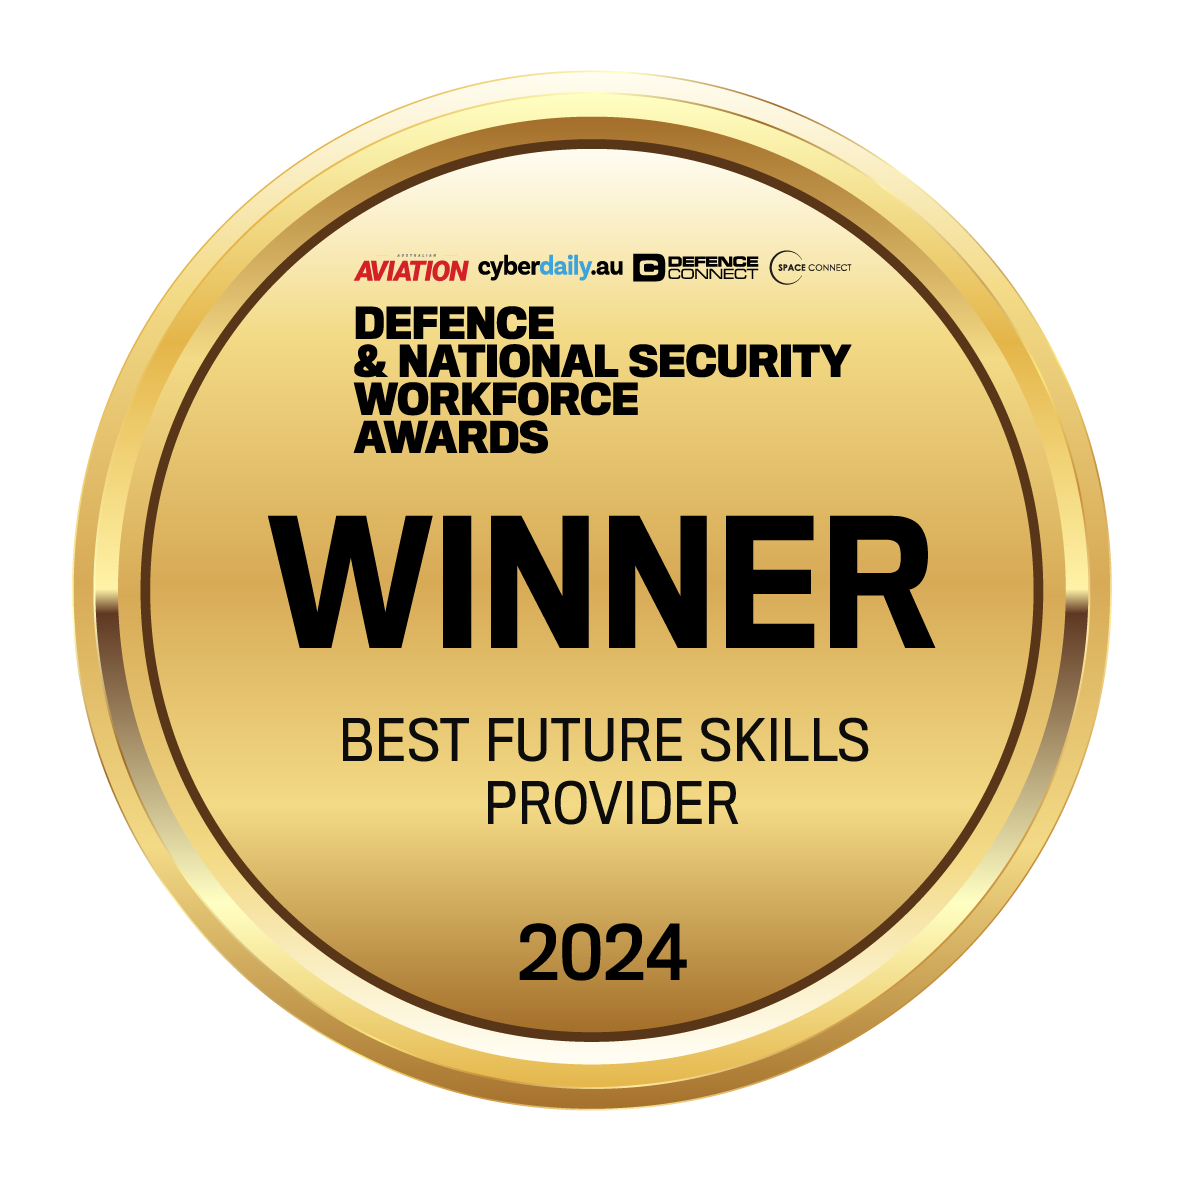 Defence & National Security Workforce Awards Winner - Best Future Skills Provider 2024